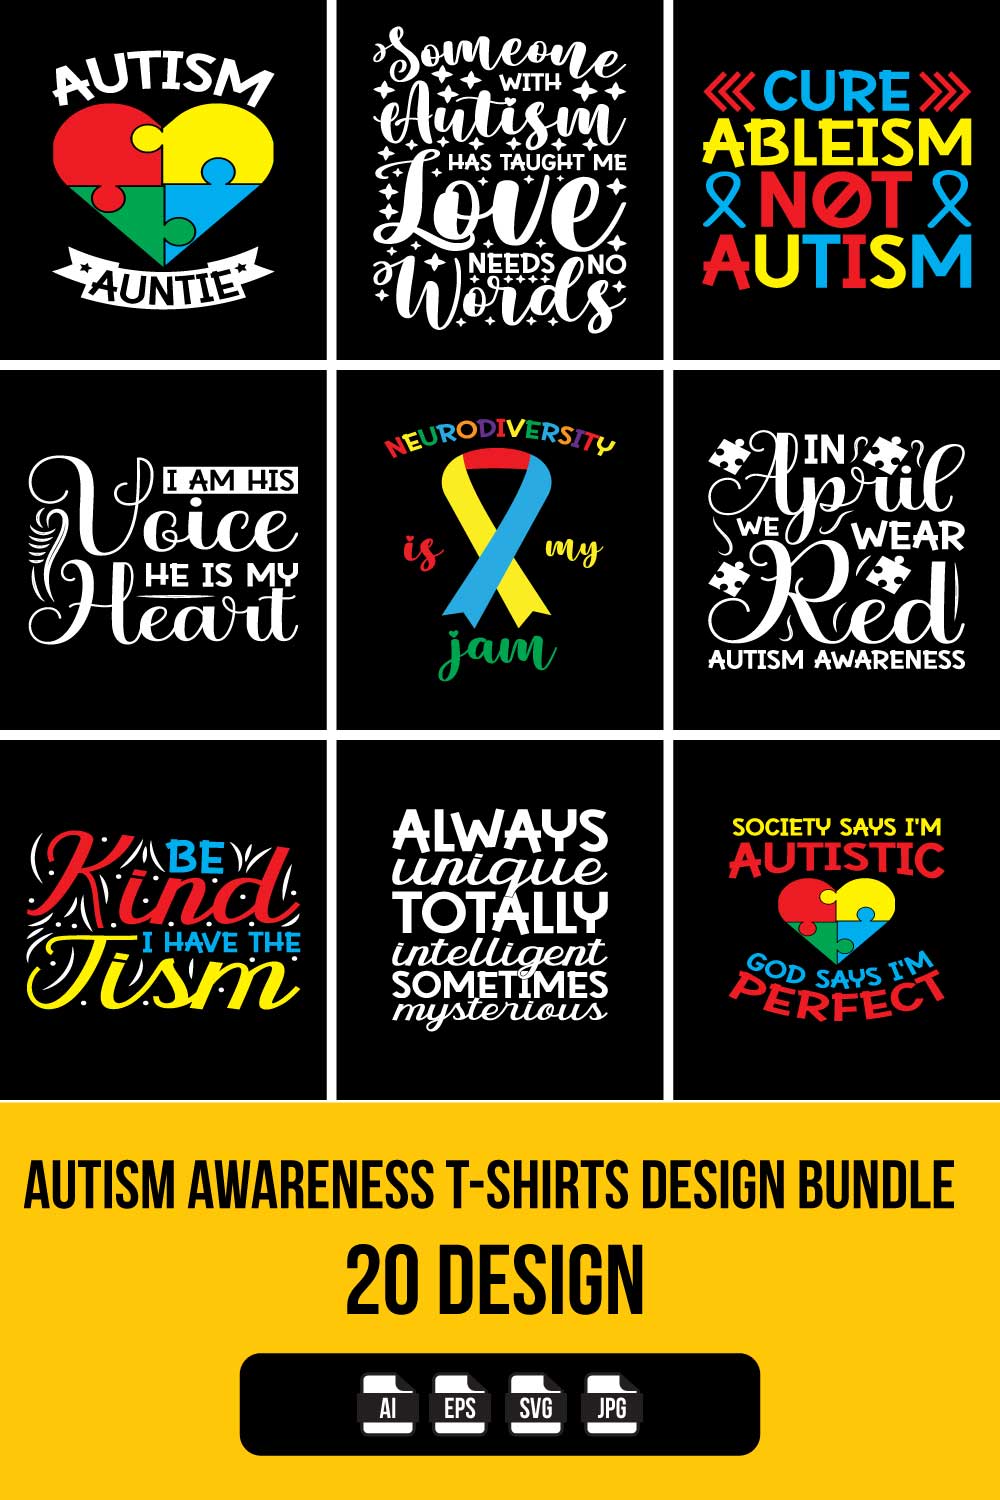 Autism awareness T-Shirts Design Bundle pinterest preview image.